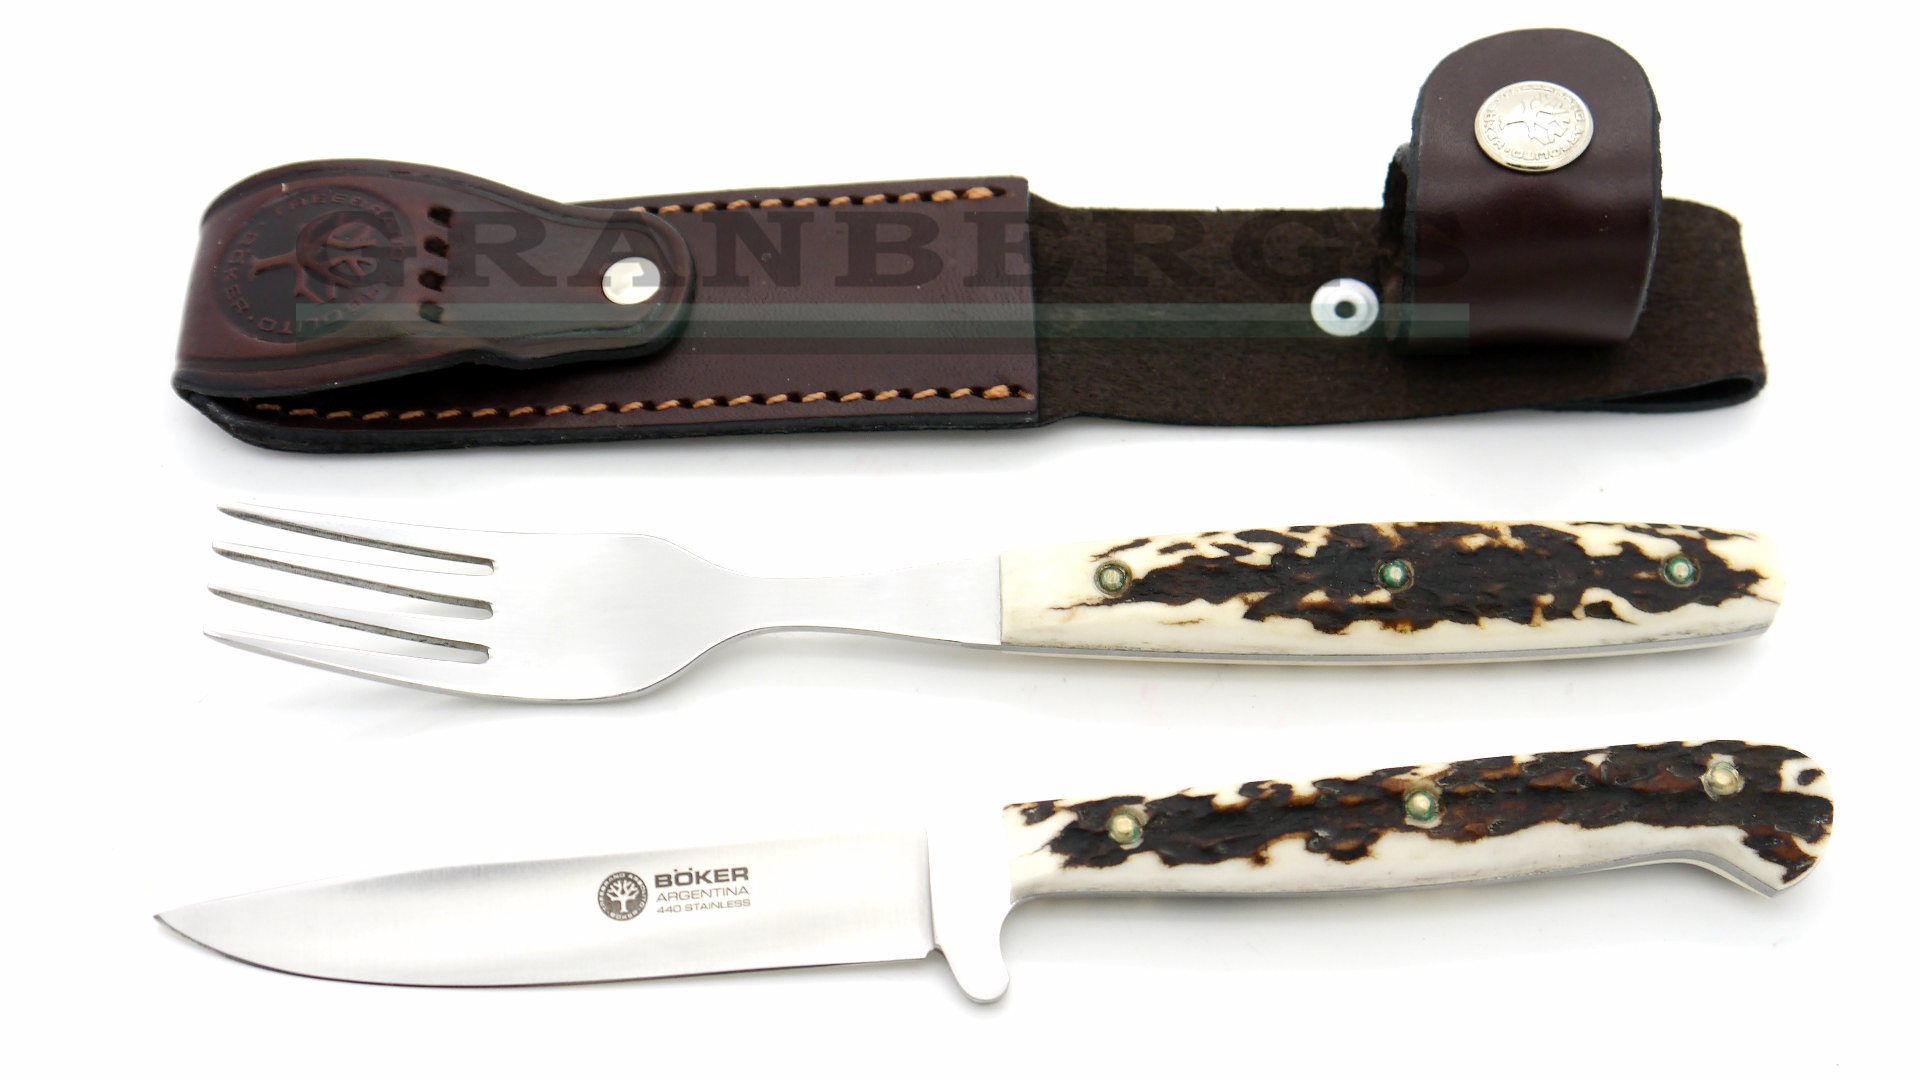 https://granbergs.com.au/getattachment/Products/Knives-Outdoors/Boker-03BA5736H-Arbolito-Salida-Fuertes-Stag-Knife/1P1120791Boker-Arbolito-Stag-Knife-and-Fork-Set-03BA501HH-1920p-Watermark.jpg.aspx